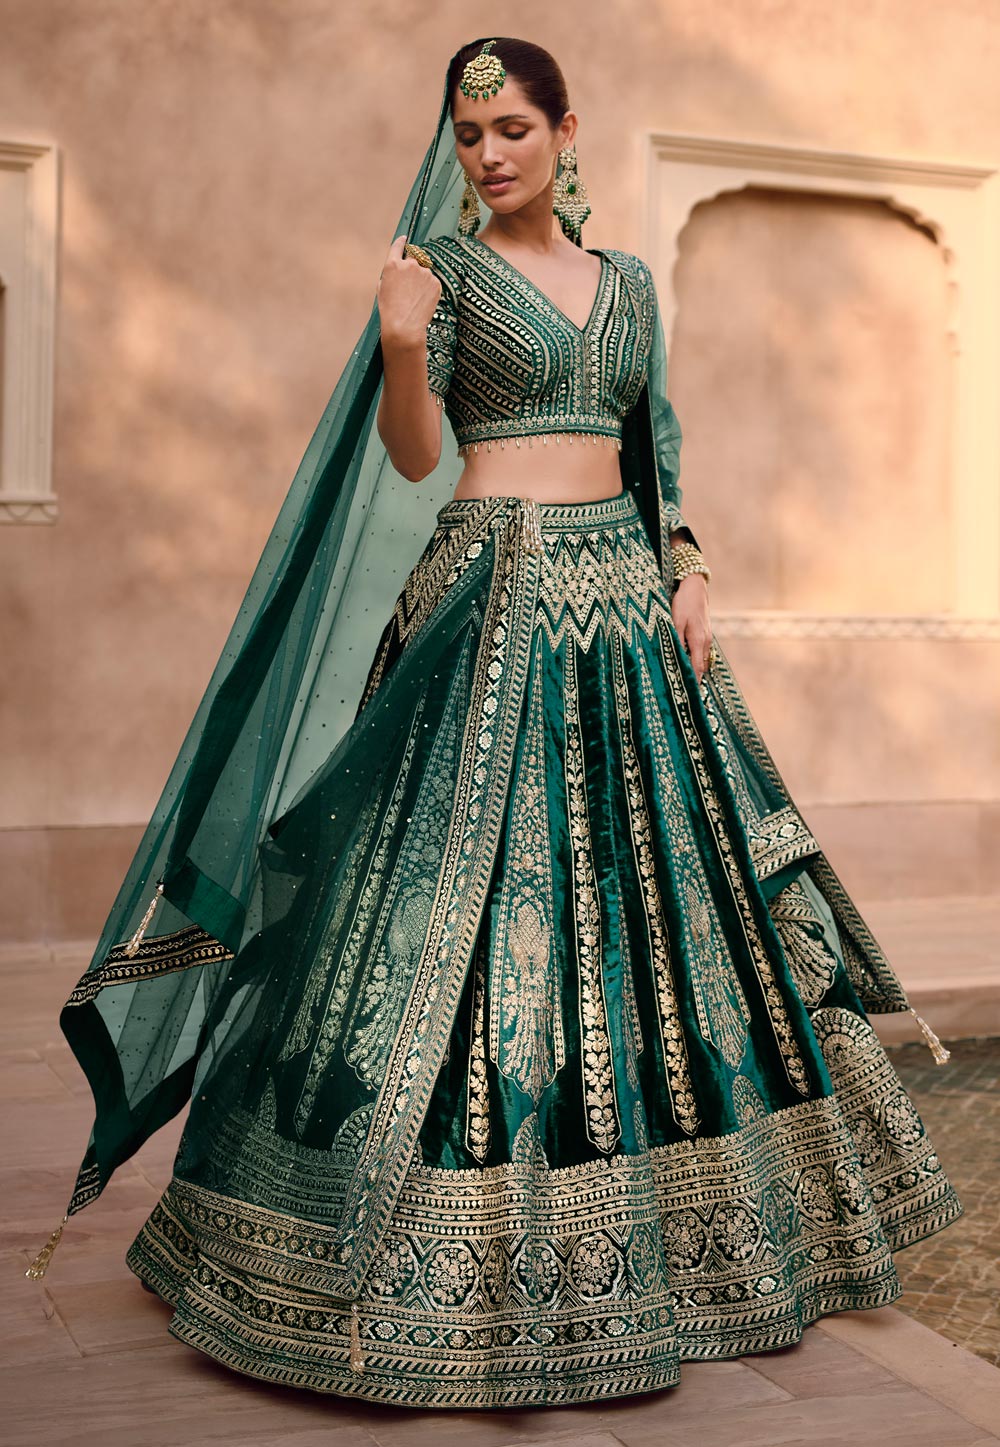 40 Pakistani Bridal Dresses For That Princess Inside You